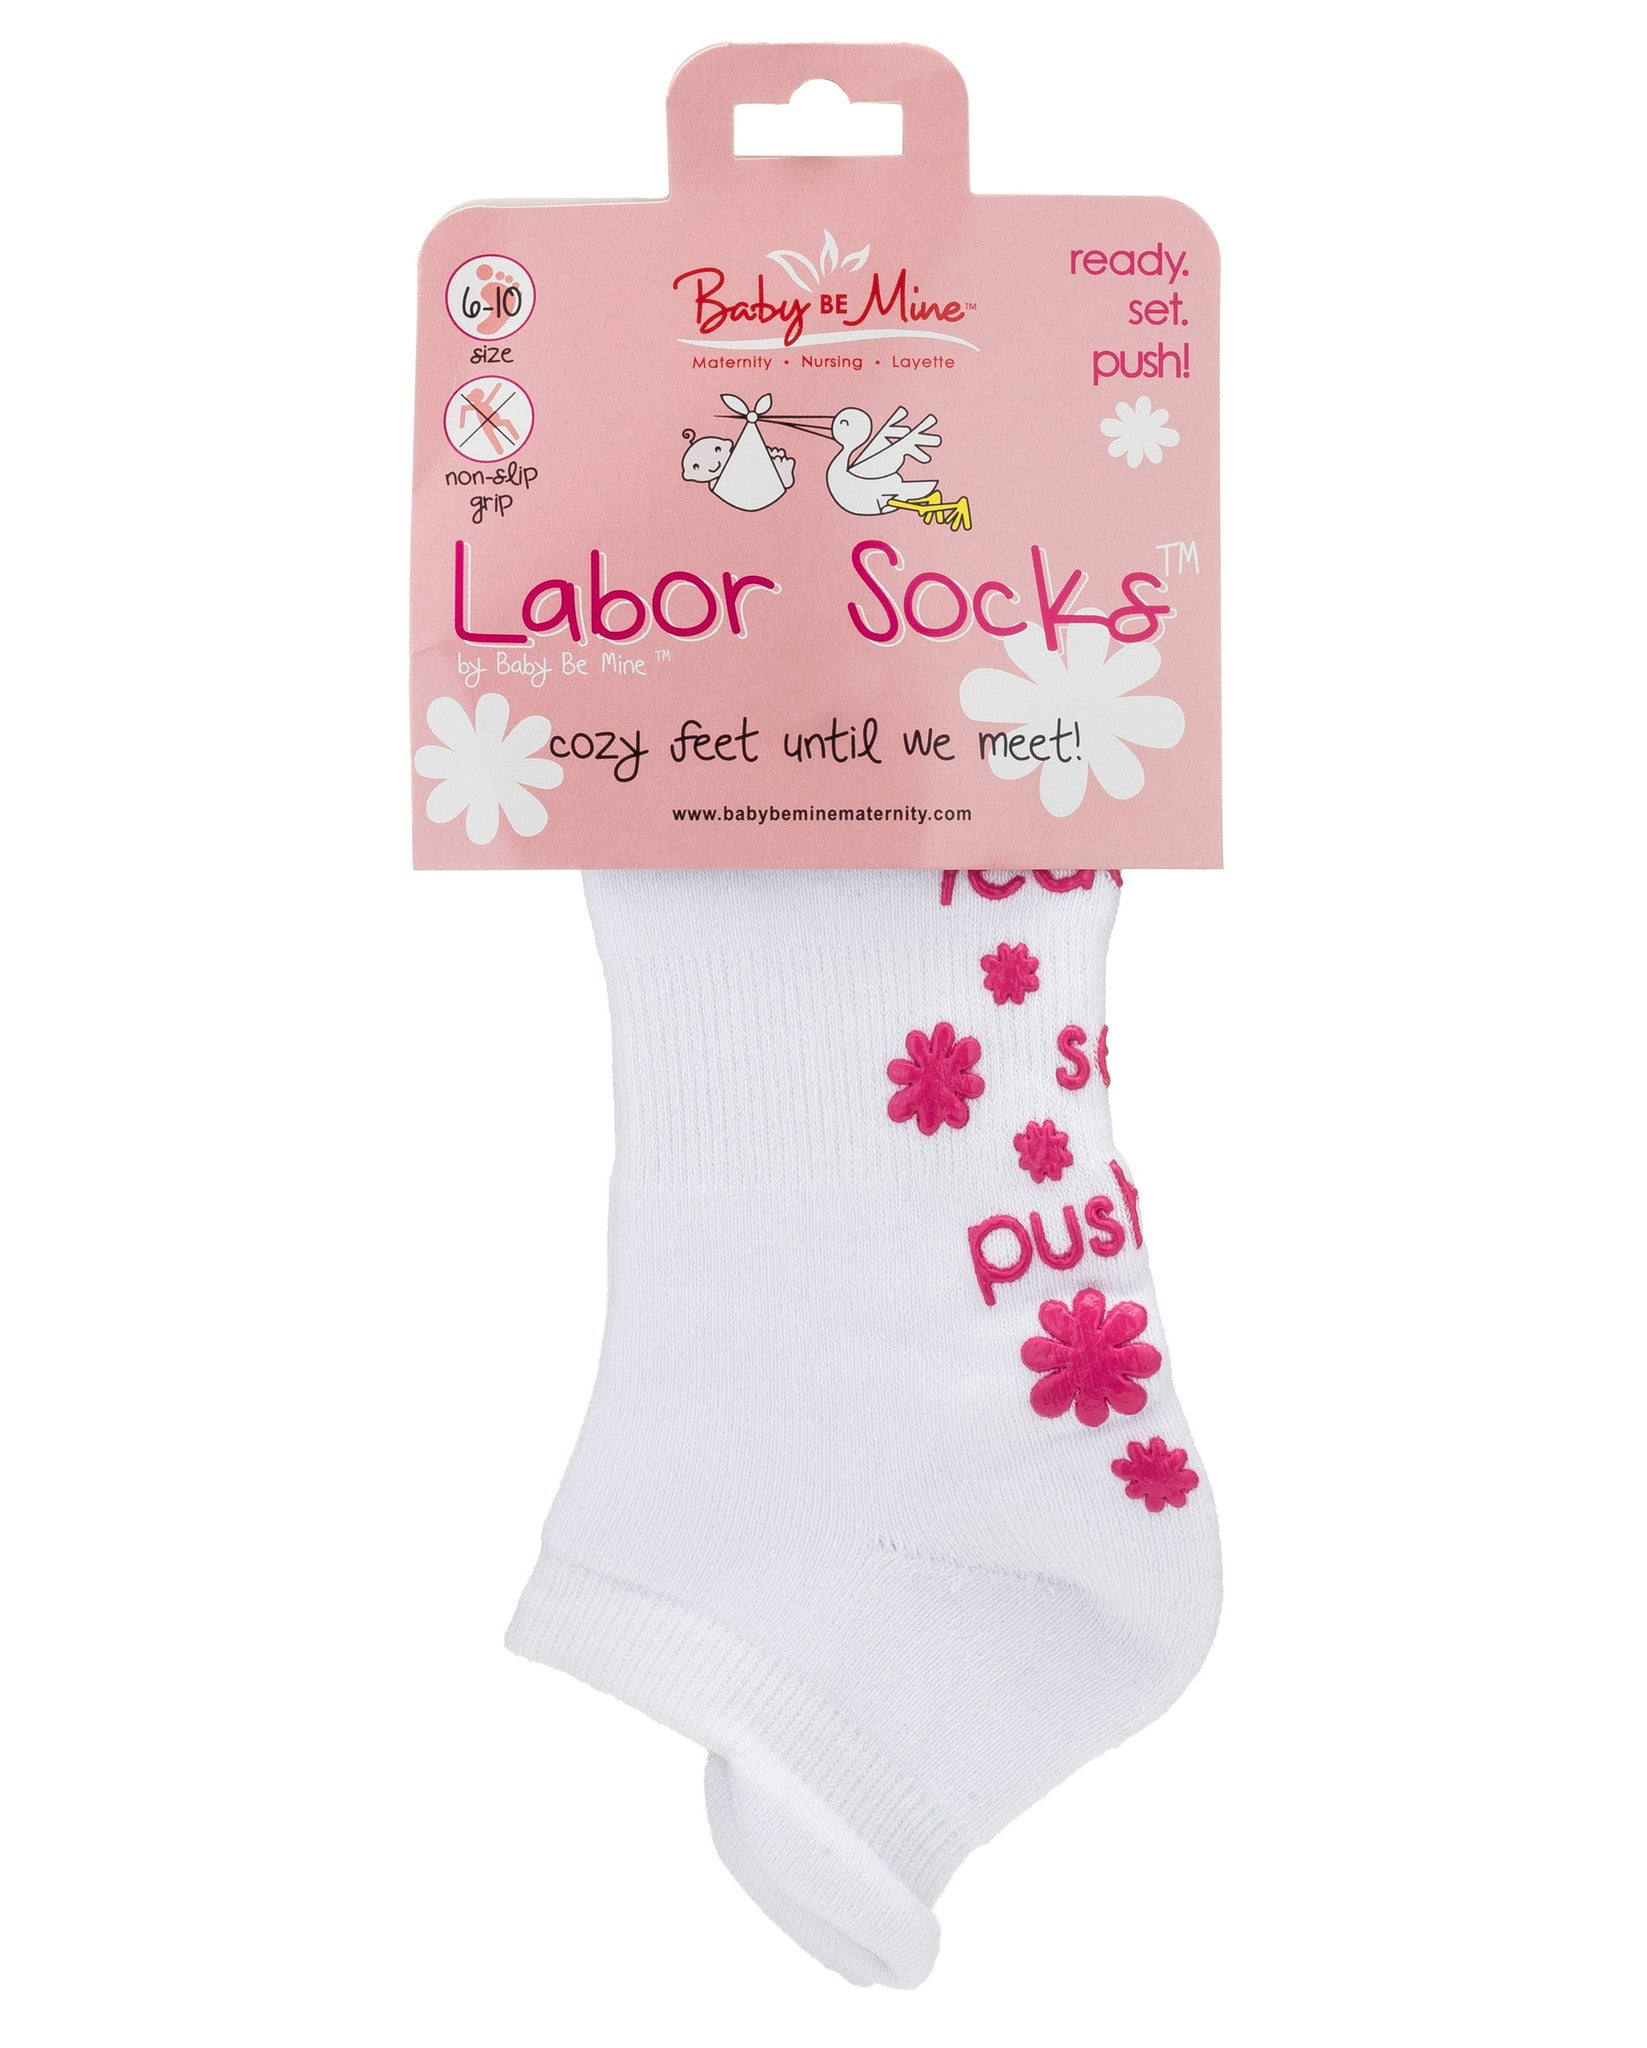 labor socks non skid pink – Baby Be Mine